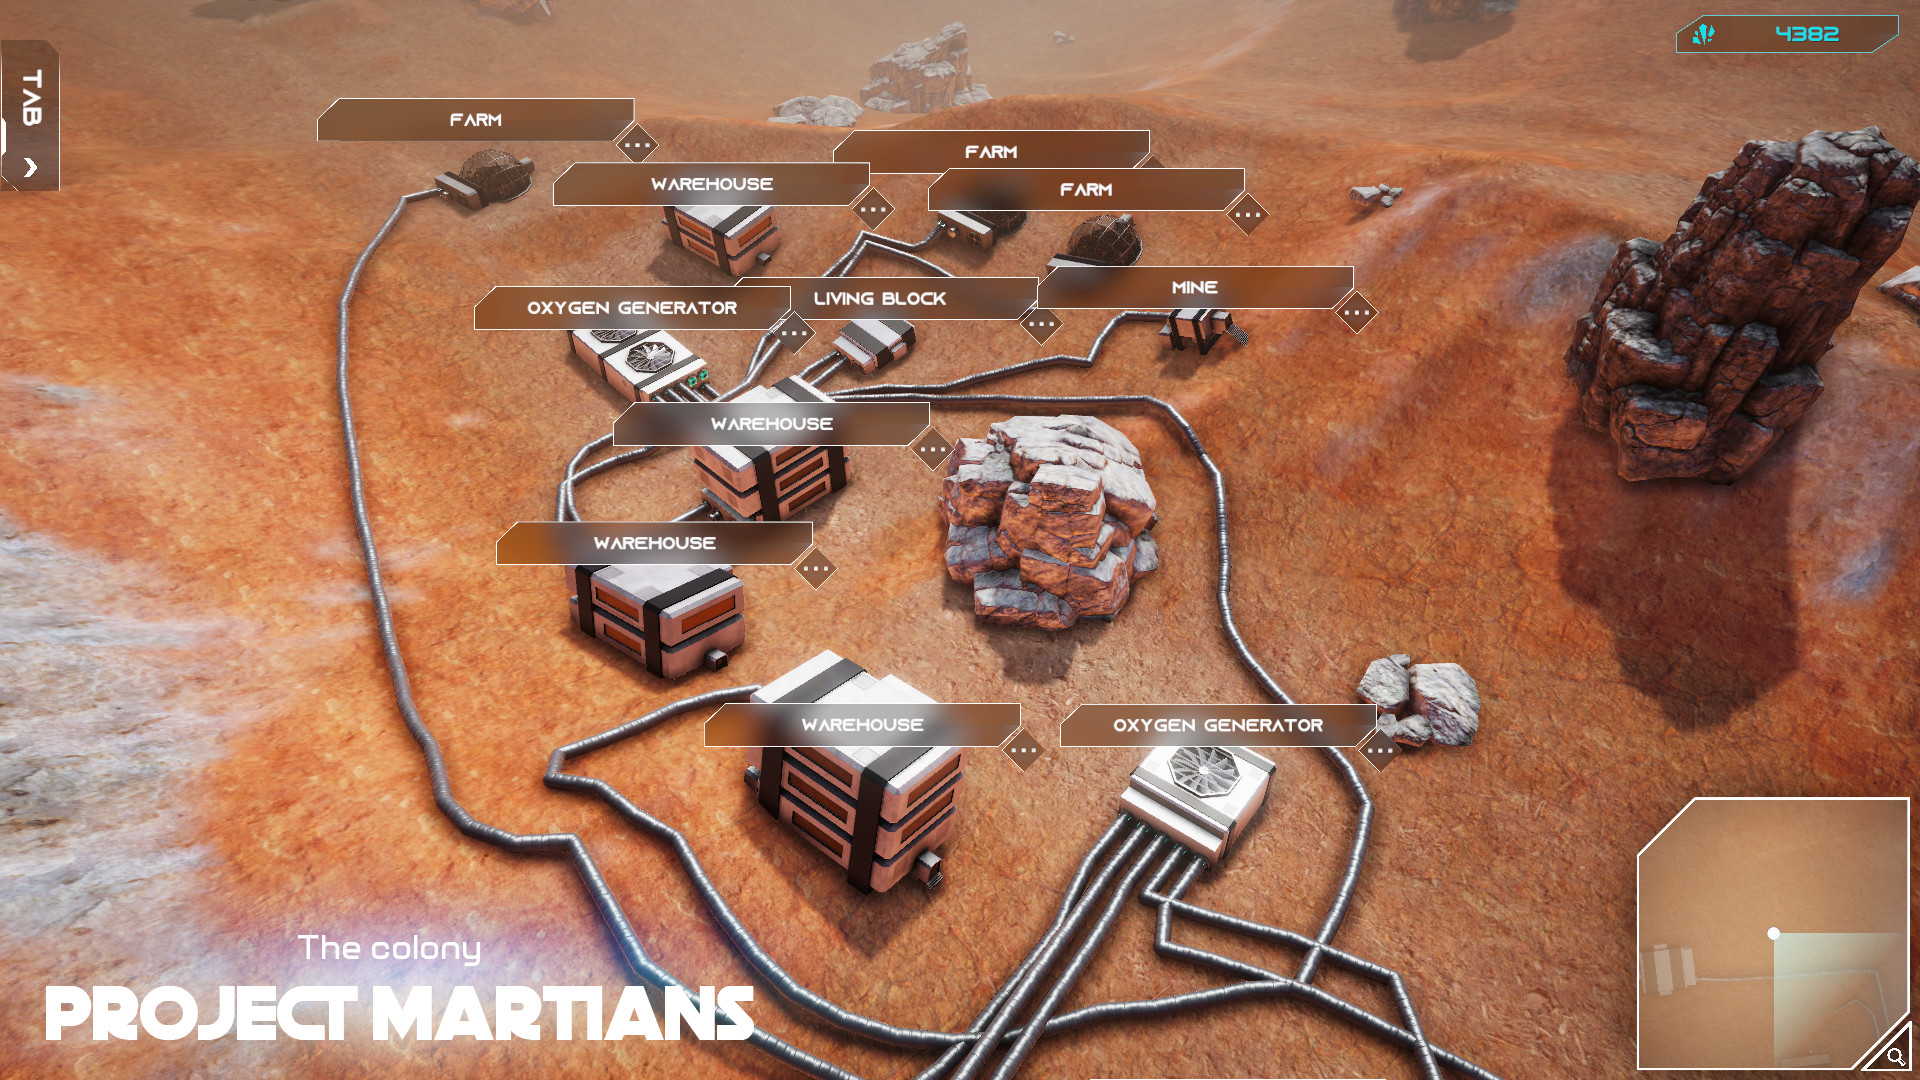 Project Martians Steam CD Key 4.42 USD